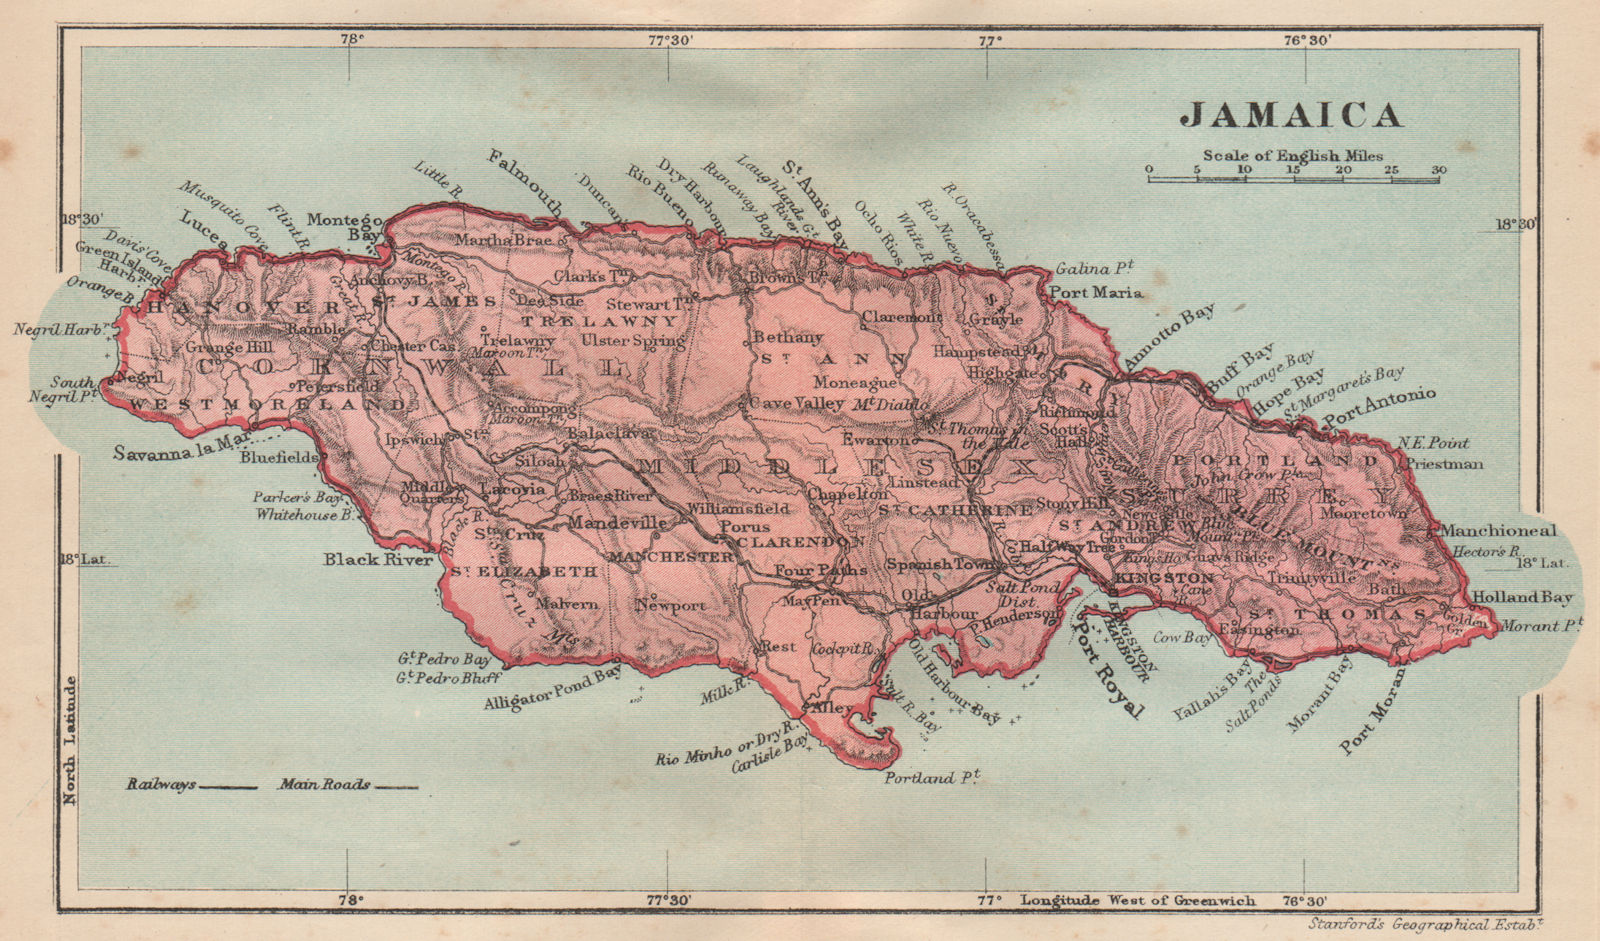 JAMAICA. Vintage map. West Indies. Caribbean 1914 old antique plan chart